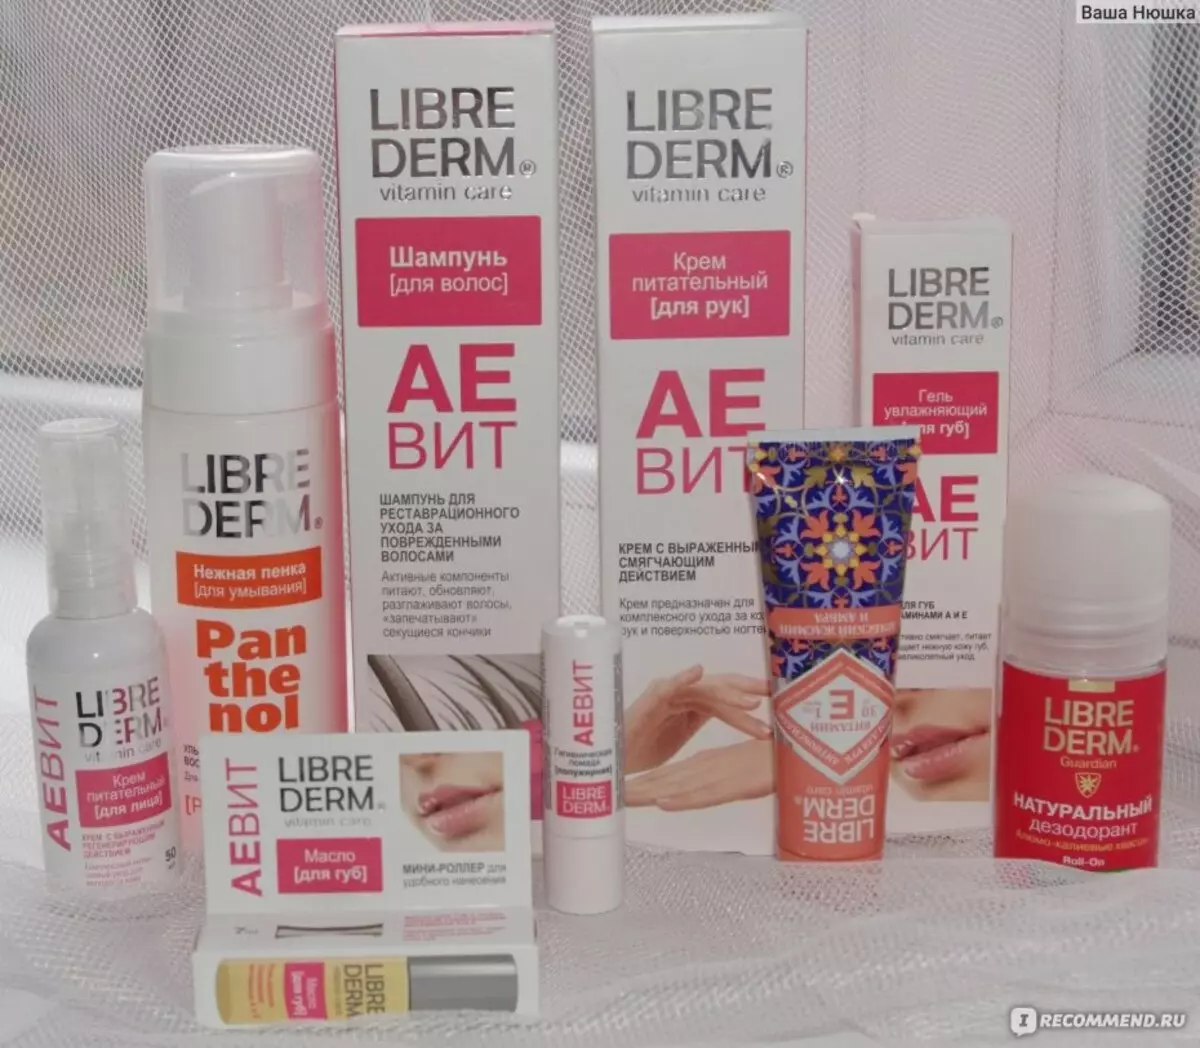 Librederm化妝品：用透明質酸和其他產品的面孔選擇資金。評論美容師和買家 4395_36